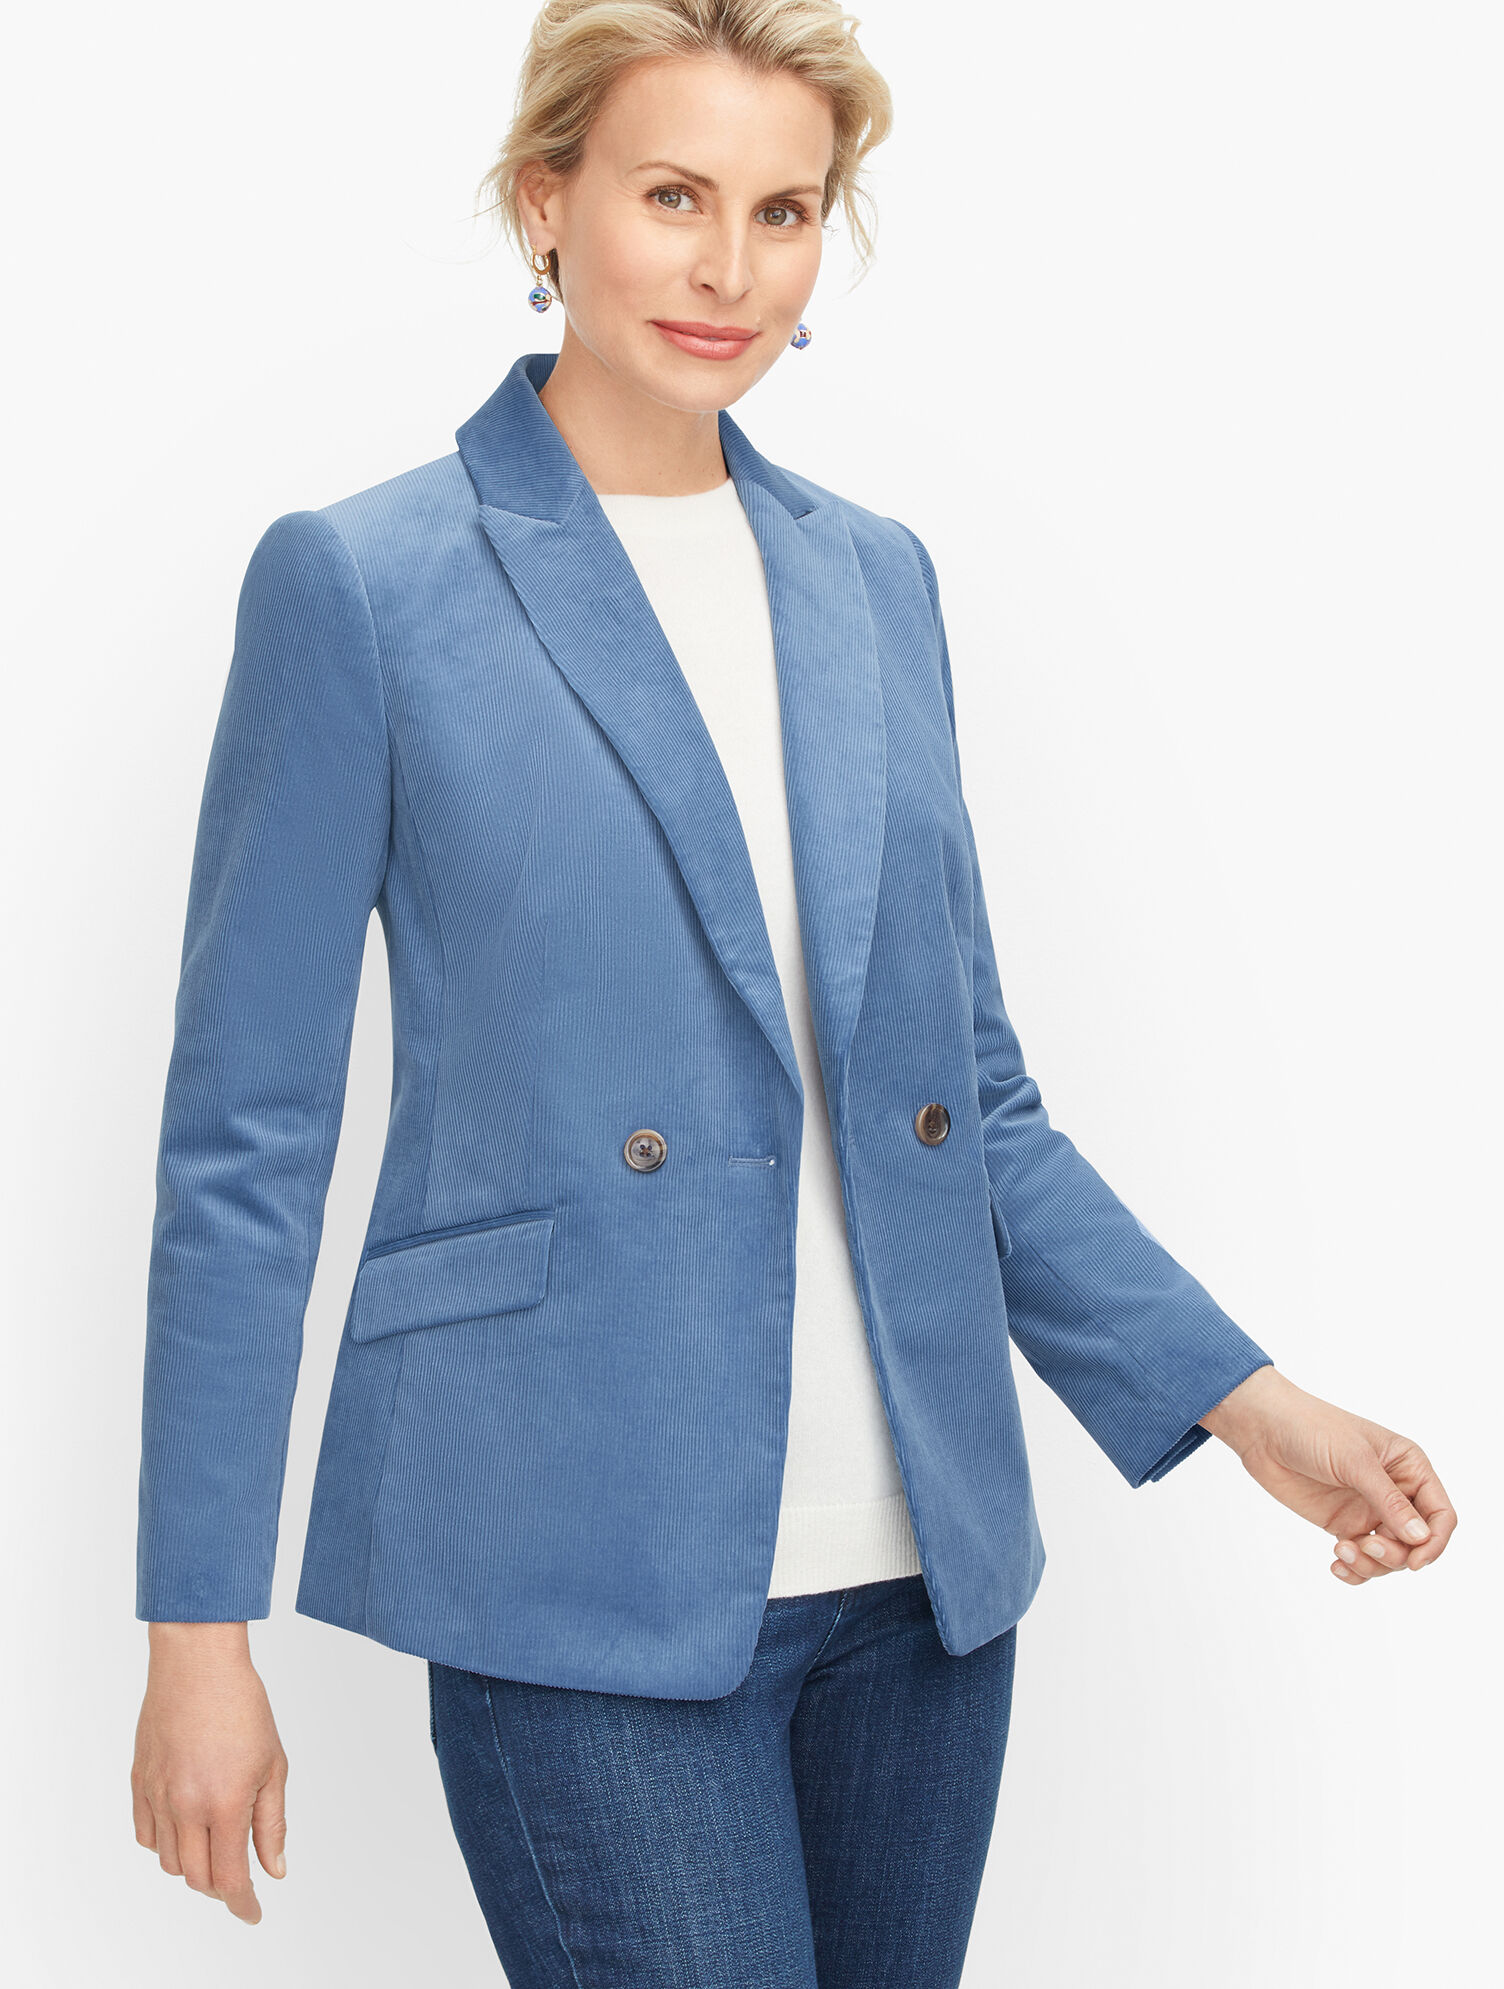 Talbots Blazer Jacket Womens Size 14 Petite Tweed Aqua Blue